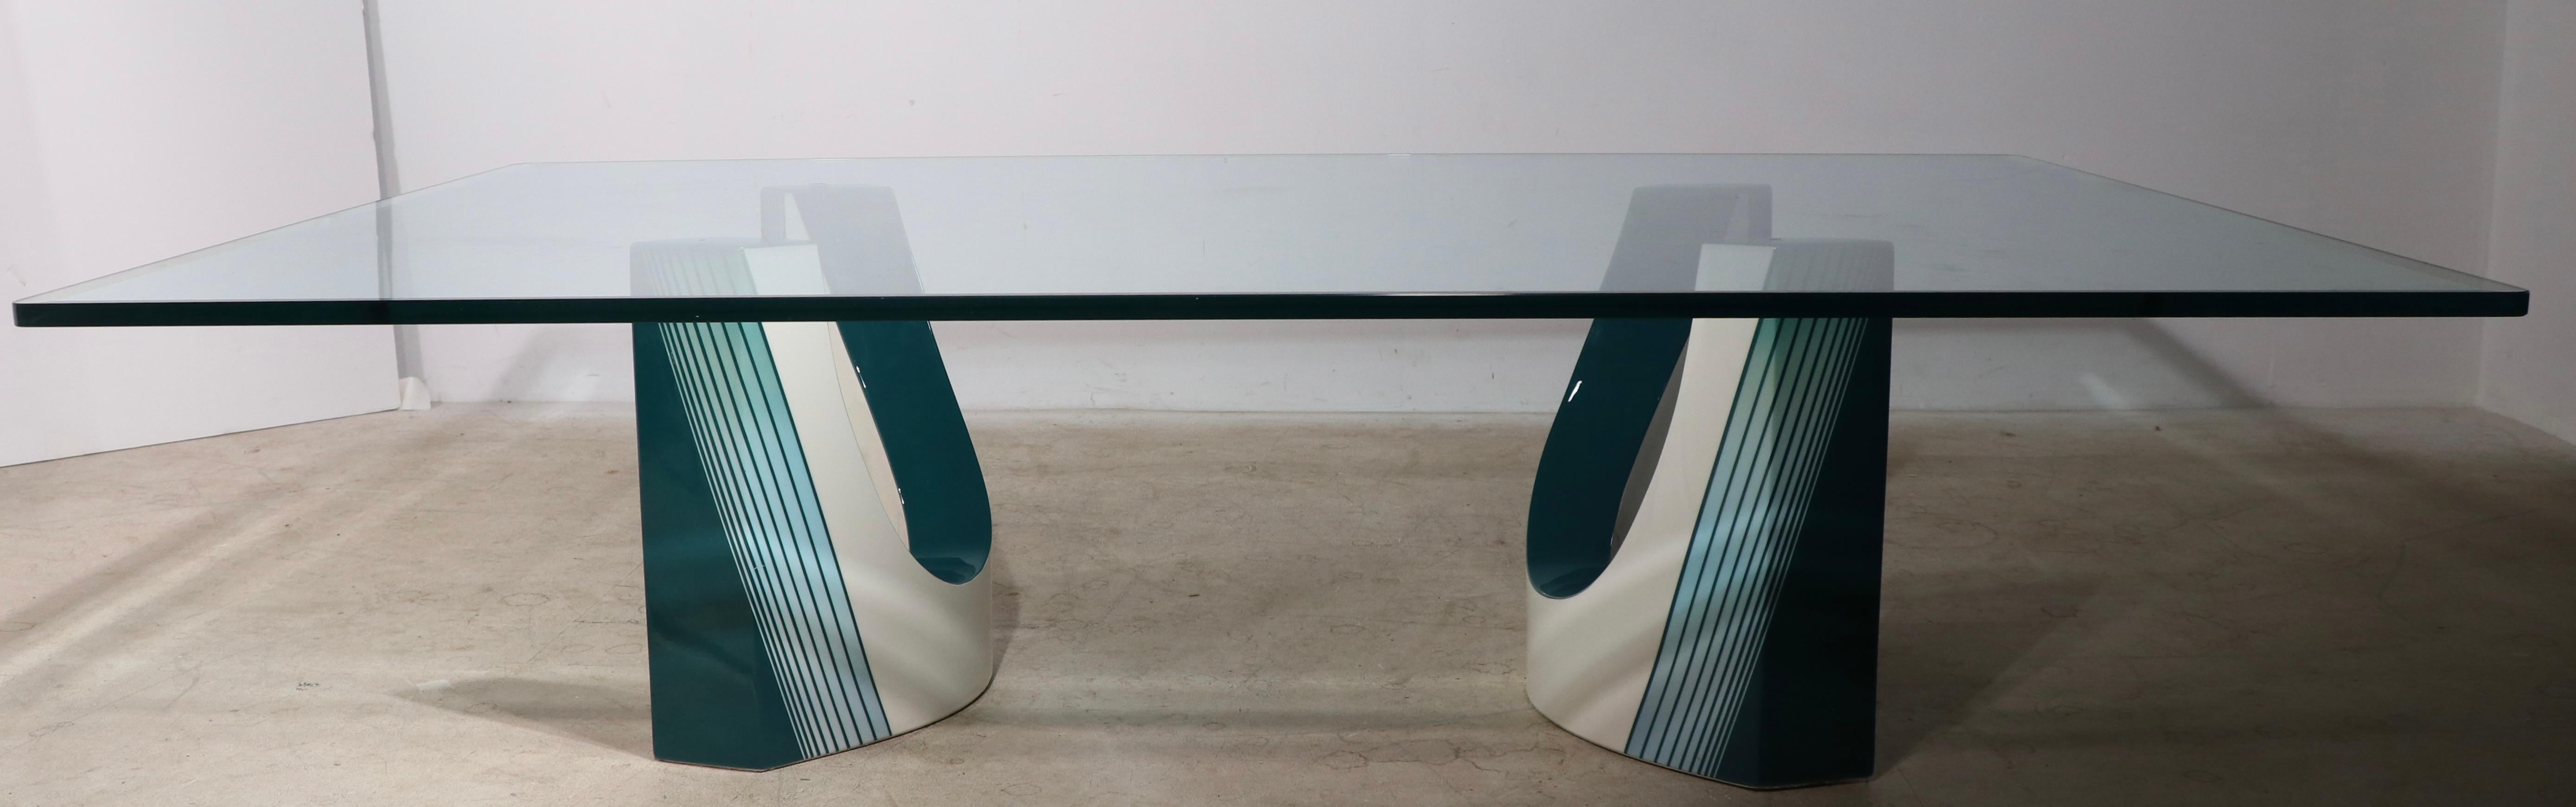 Postmoderne Table basse post-moderne en verre et émail de style post-moderne datée de91 probablement fabriquée en Italie en vente